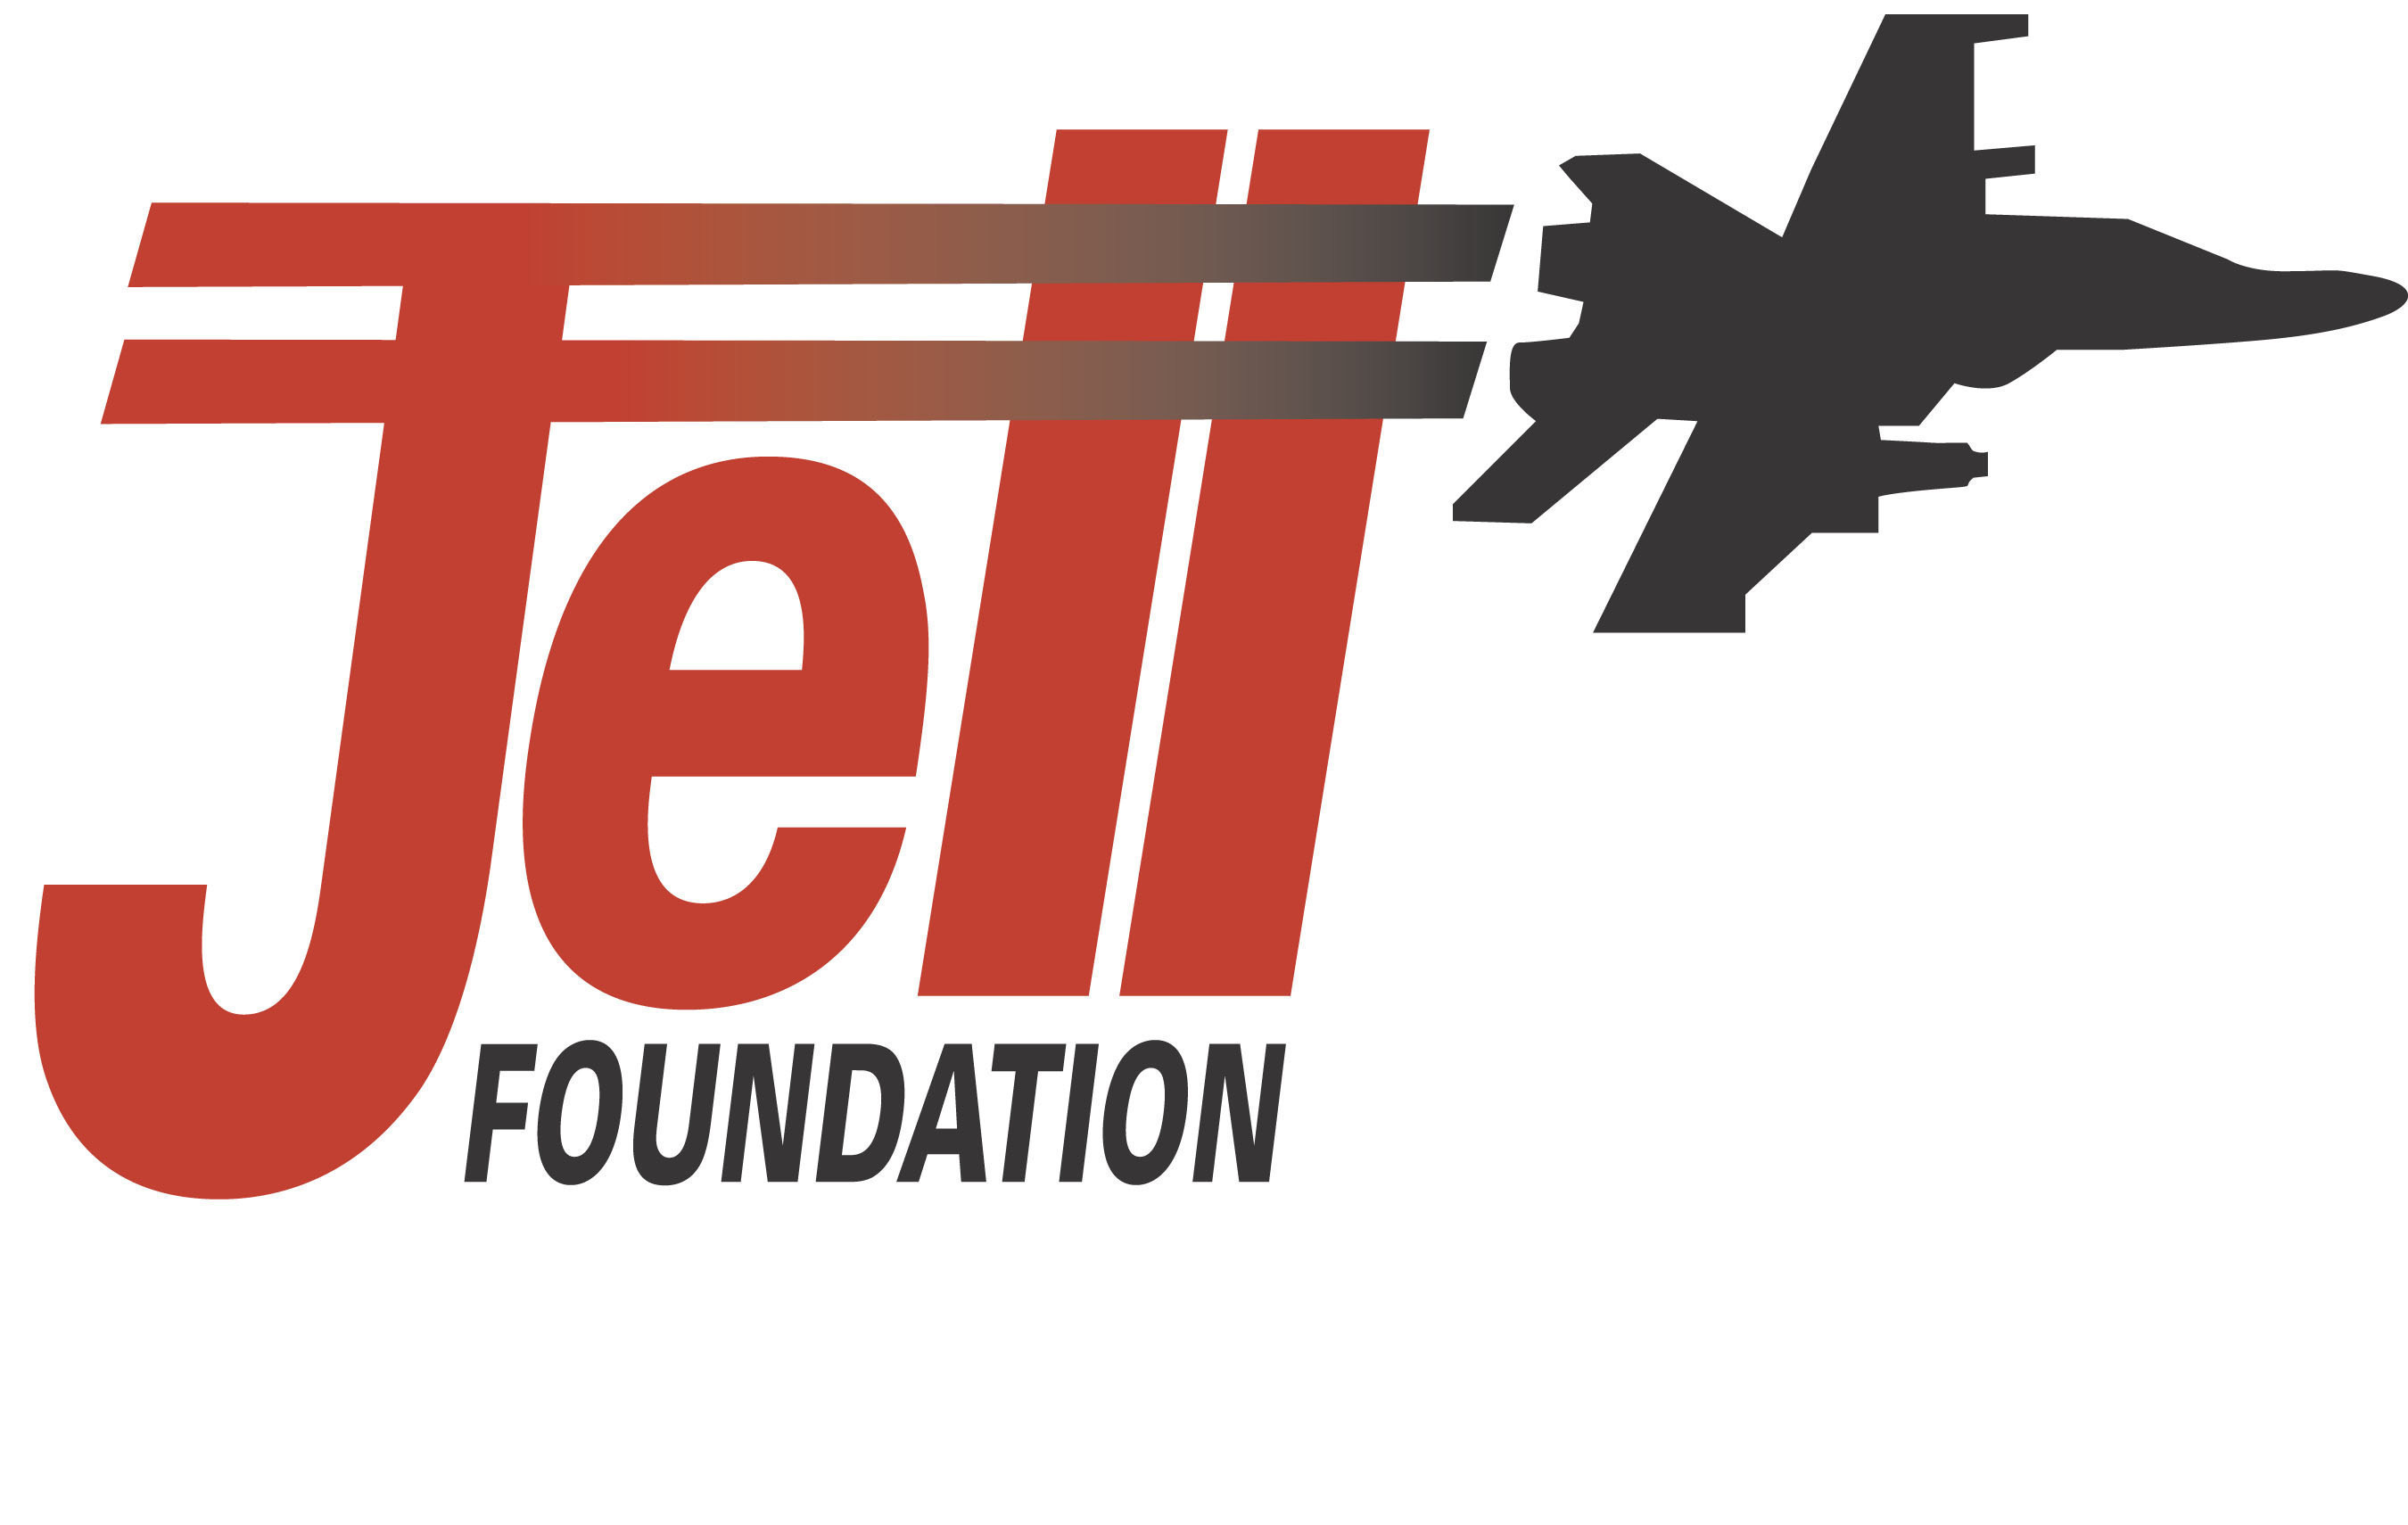 The Jett Foundation